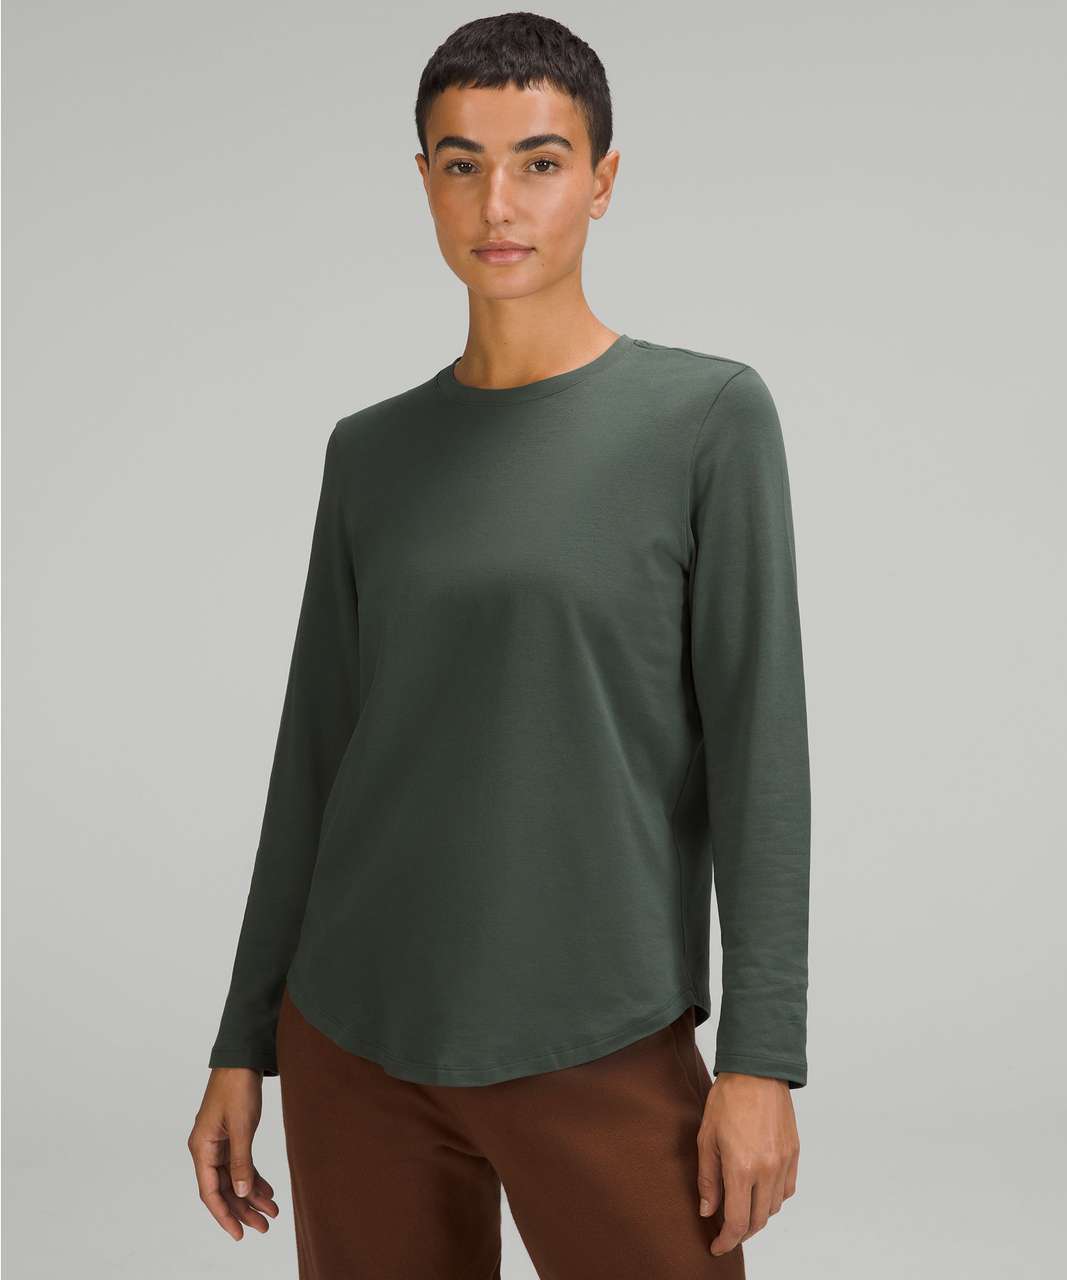 Lululemon Love Long Sleeve Shirt - Smoked Spruce